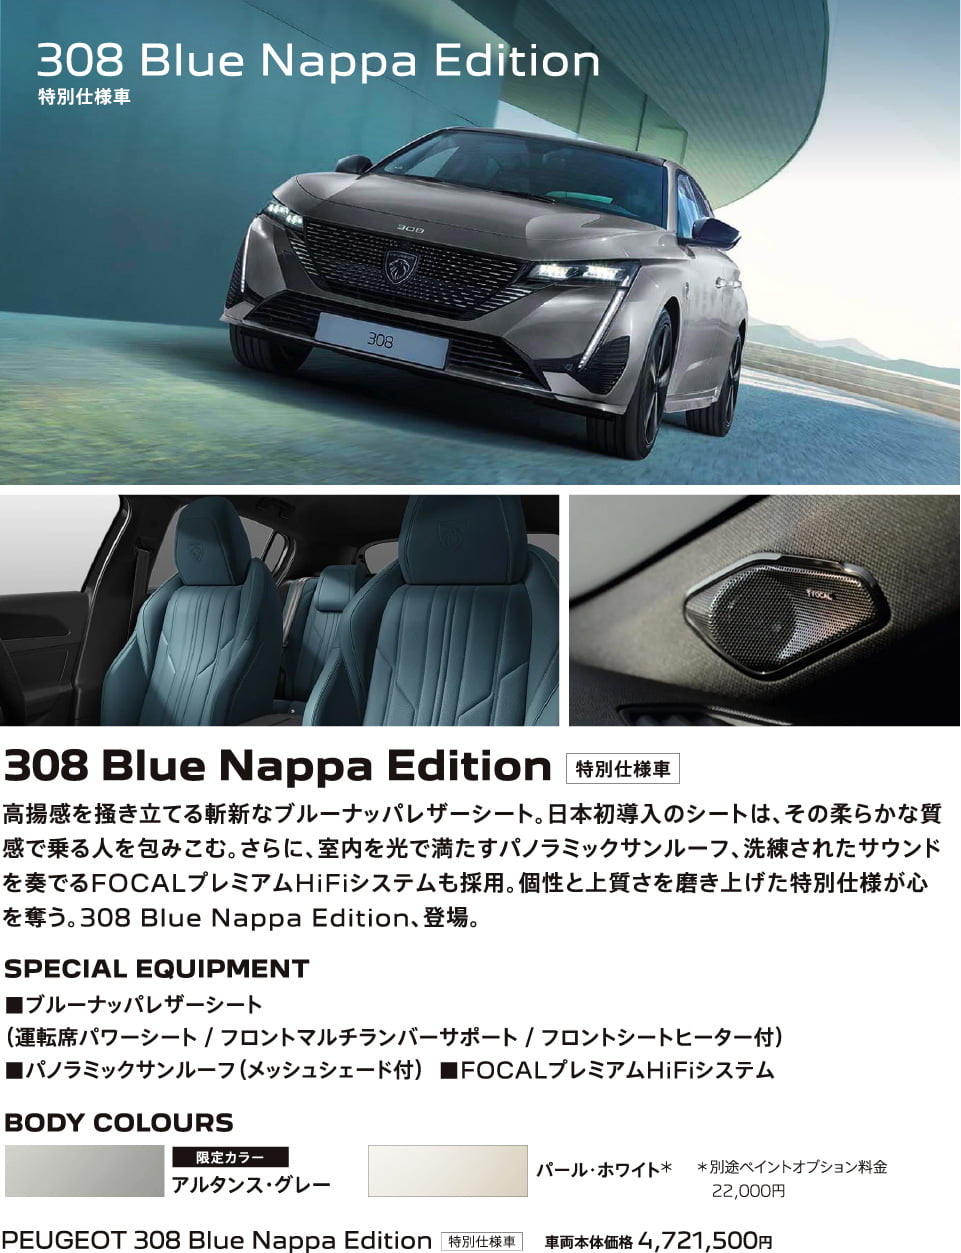 308 Blue Nappa Edition